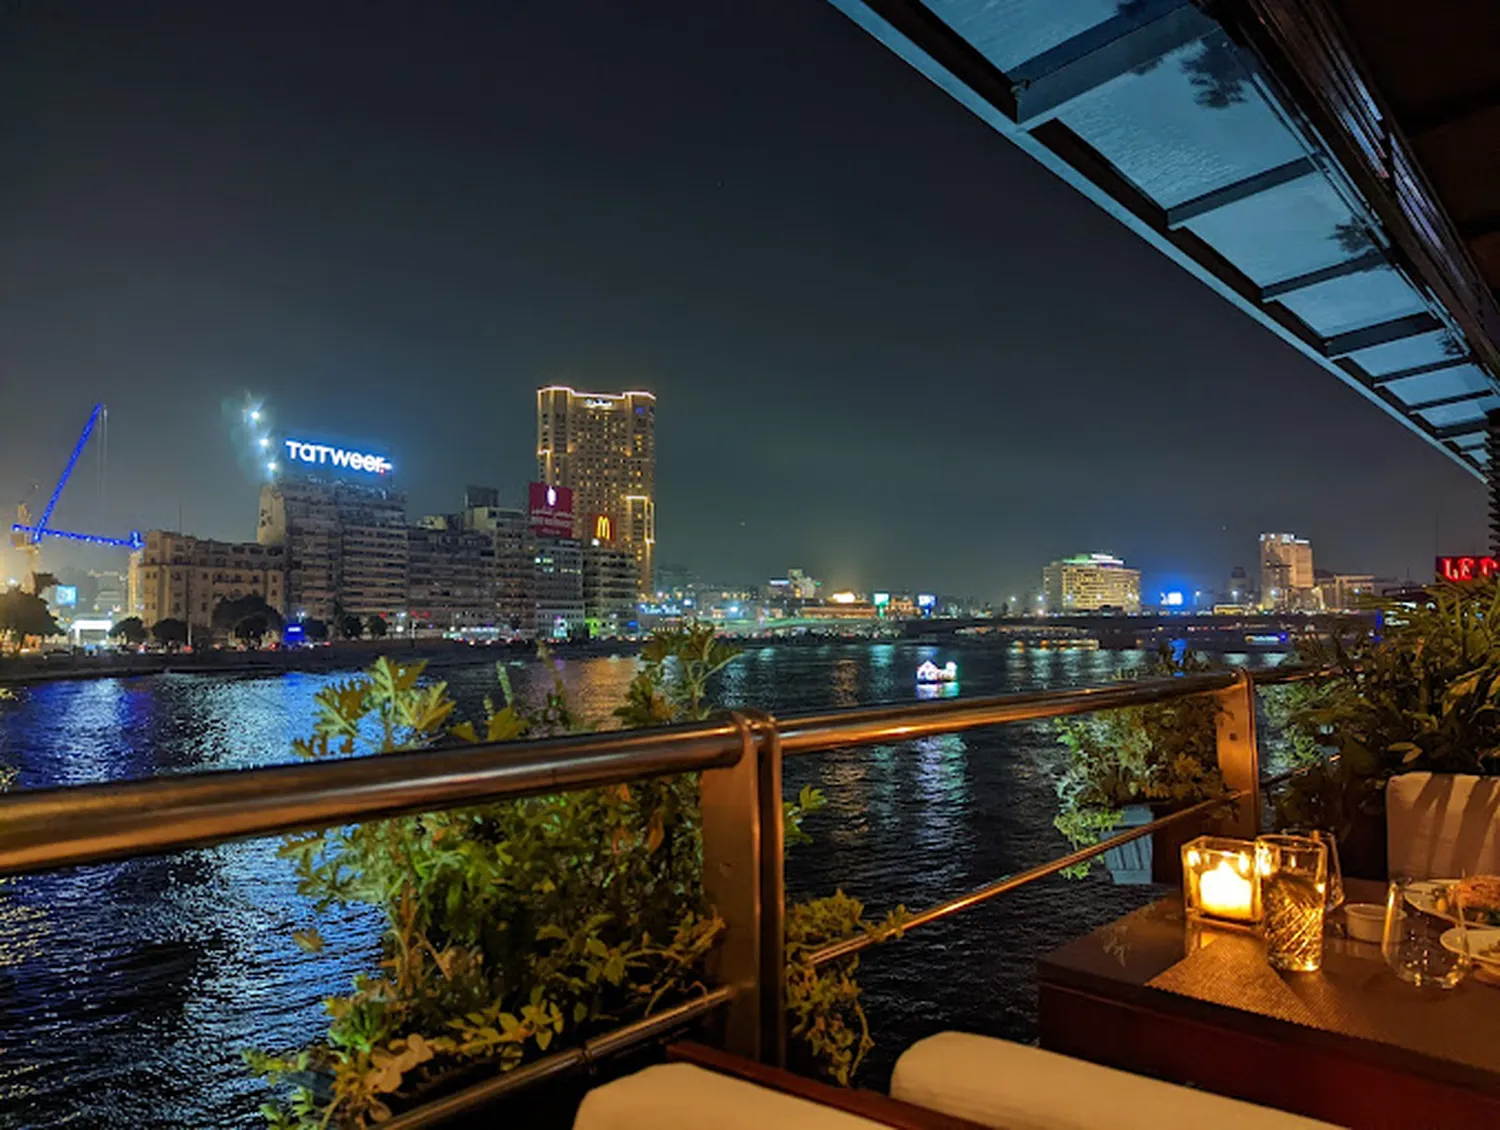 Pier88 Nile River restaurant Cairo